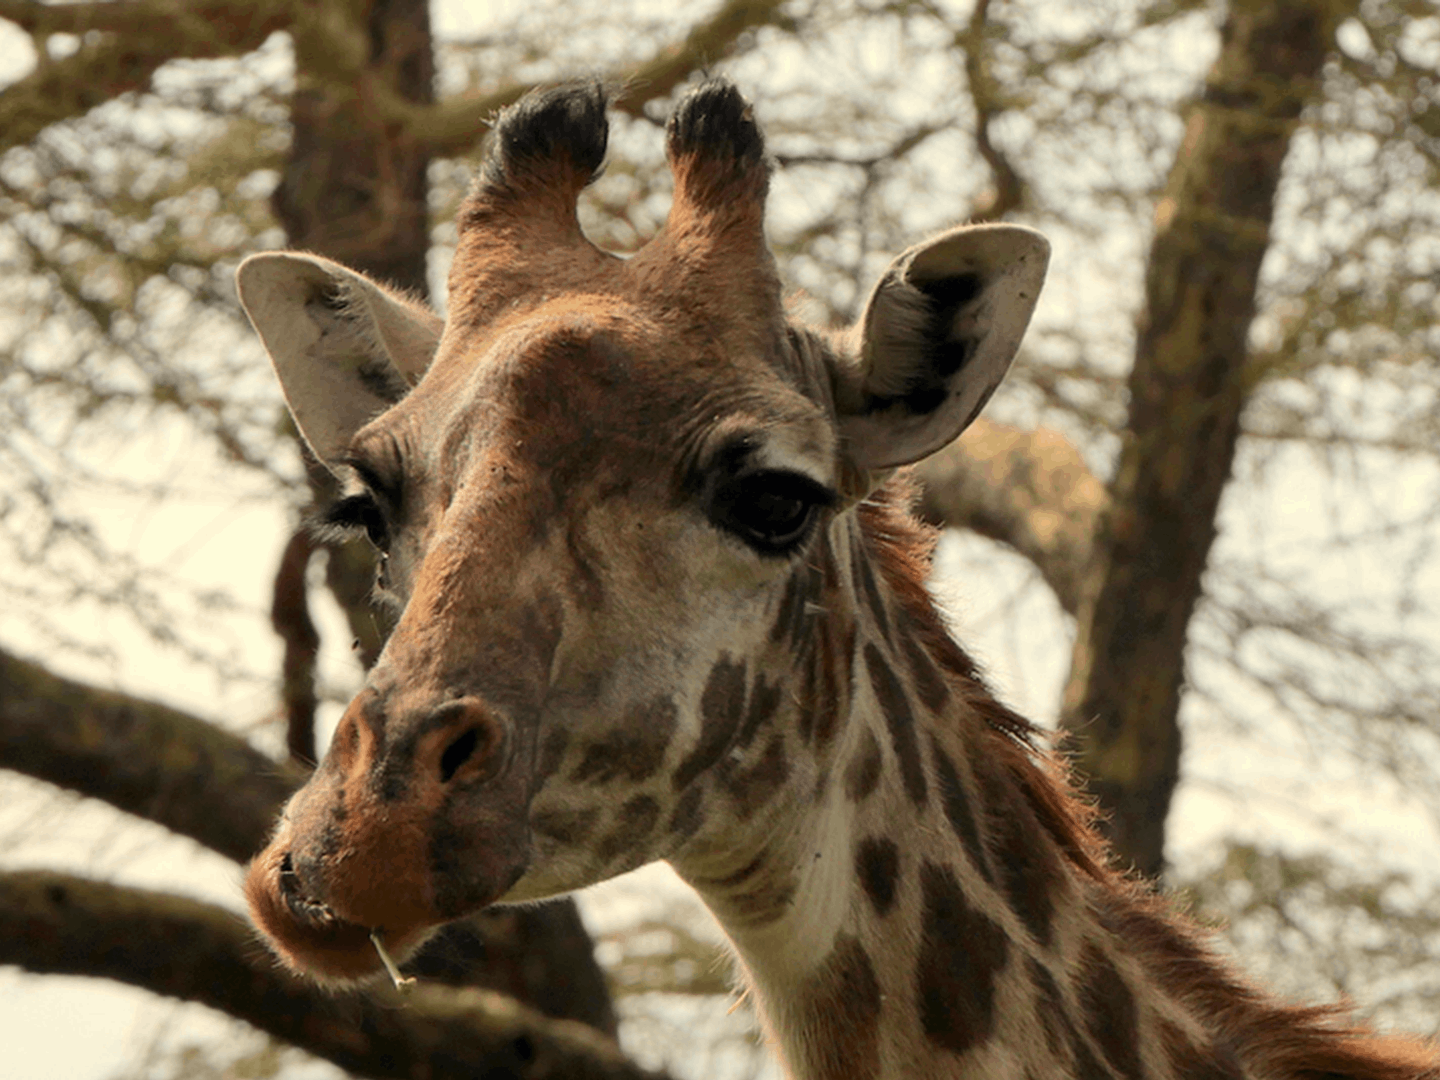 Les girafes de Nairobi